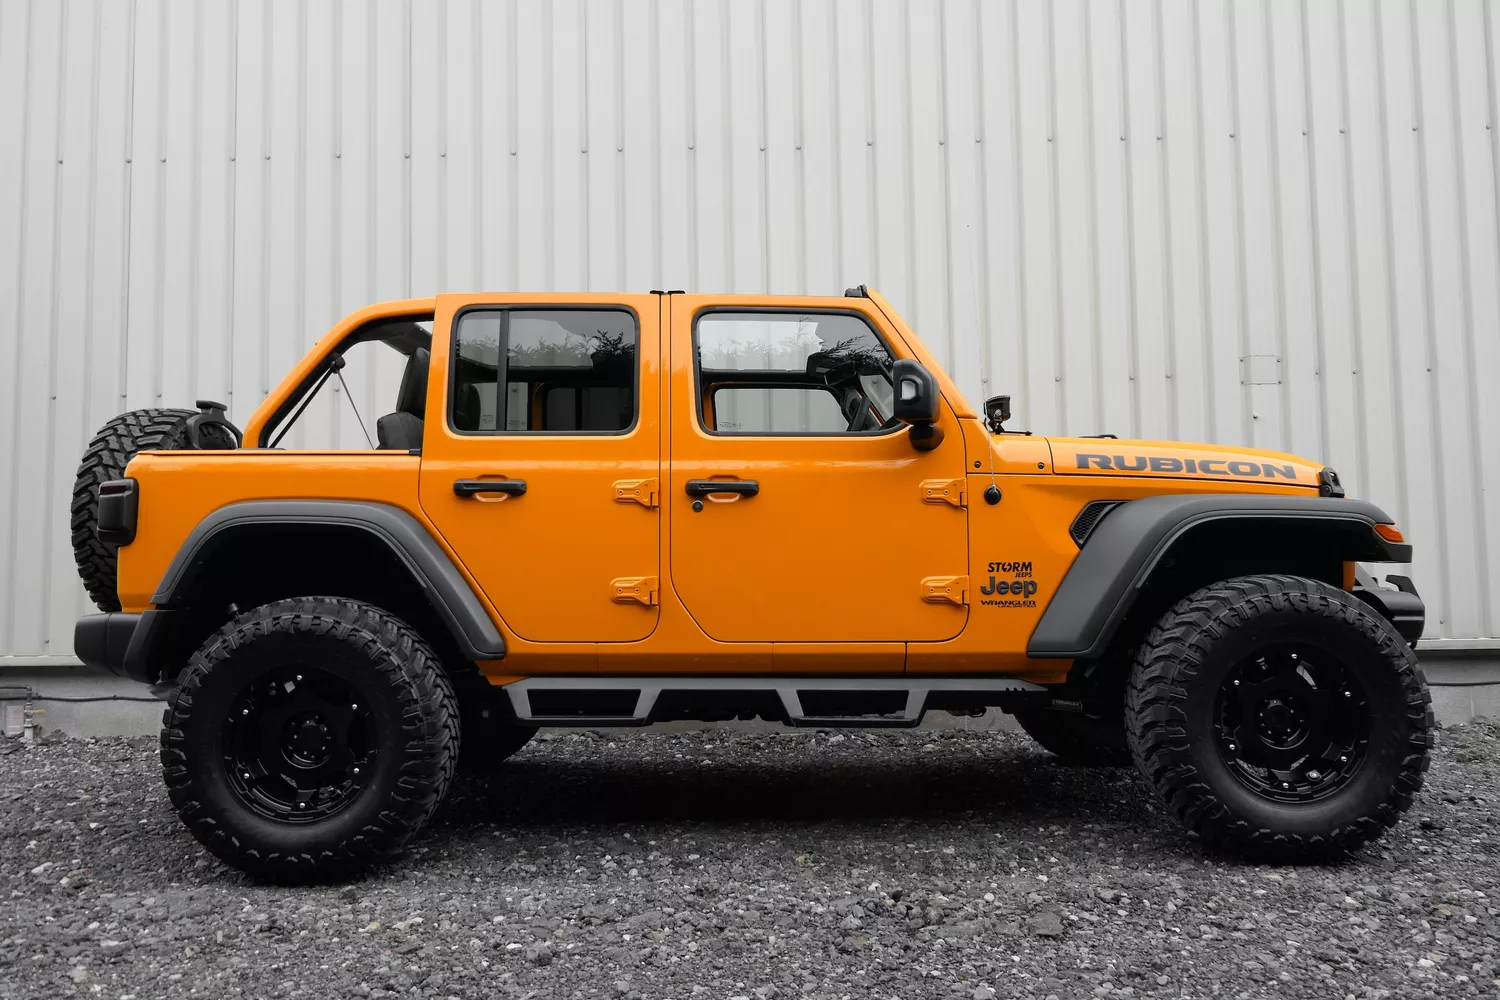 STORM-49, 2021 Nacho Orange Jeep Wrangler JL Rubicon 4 Door  | Showcase  | Storm Jeeps